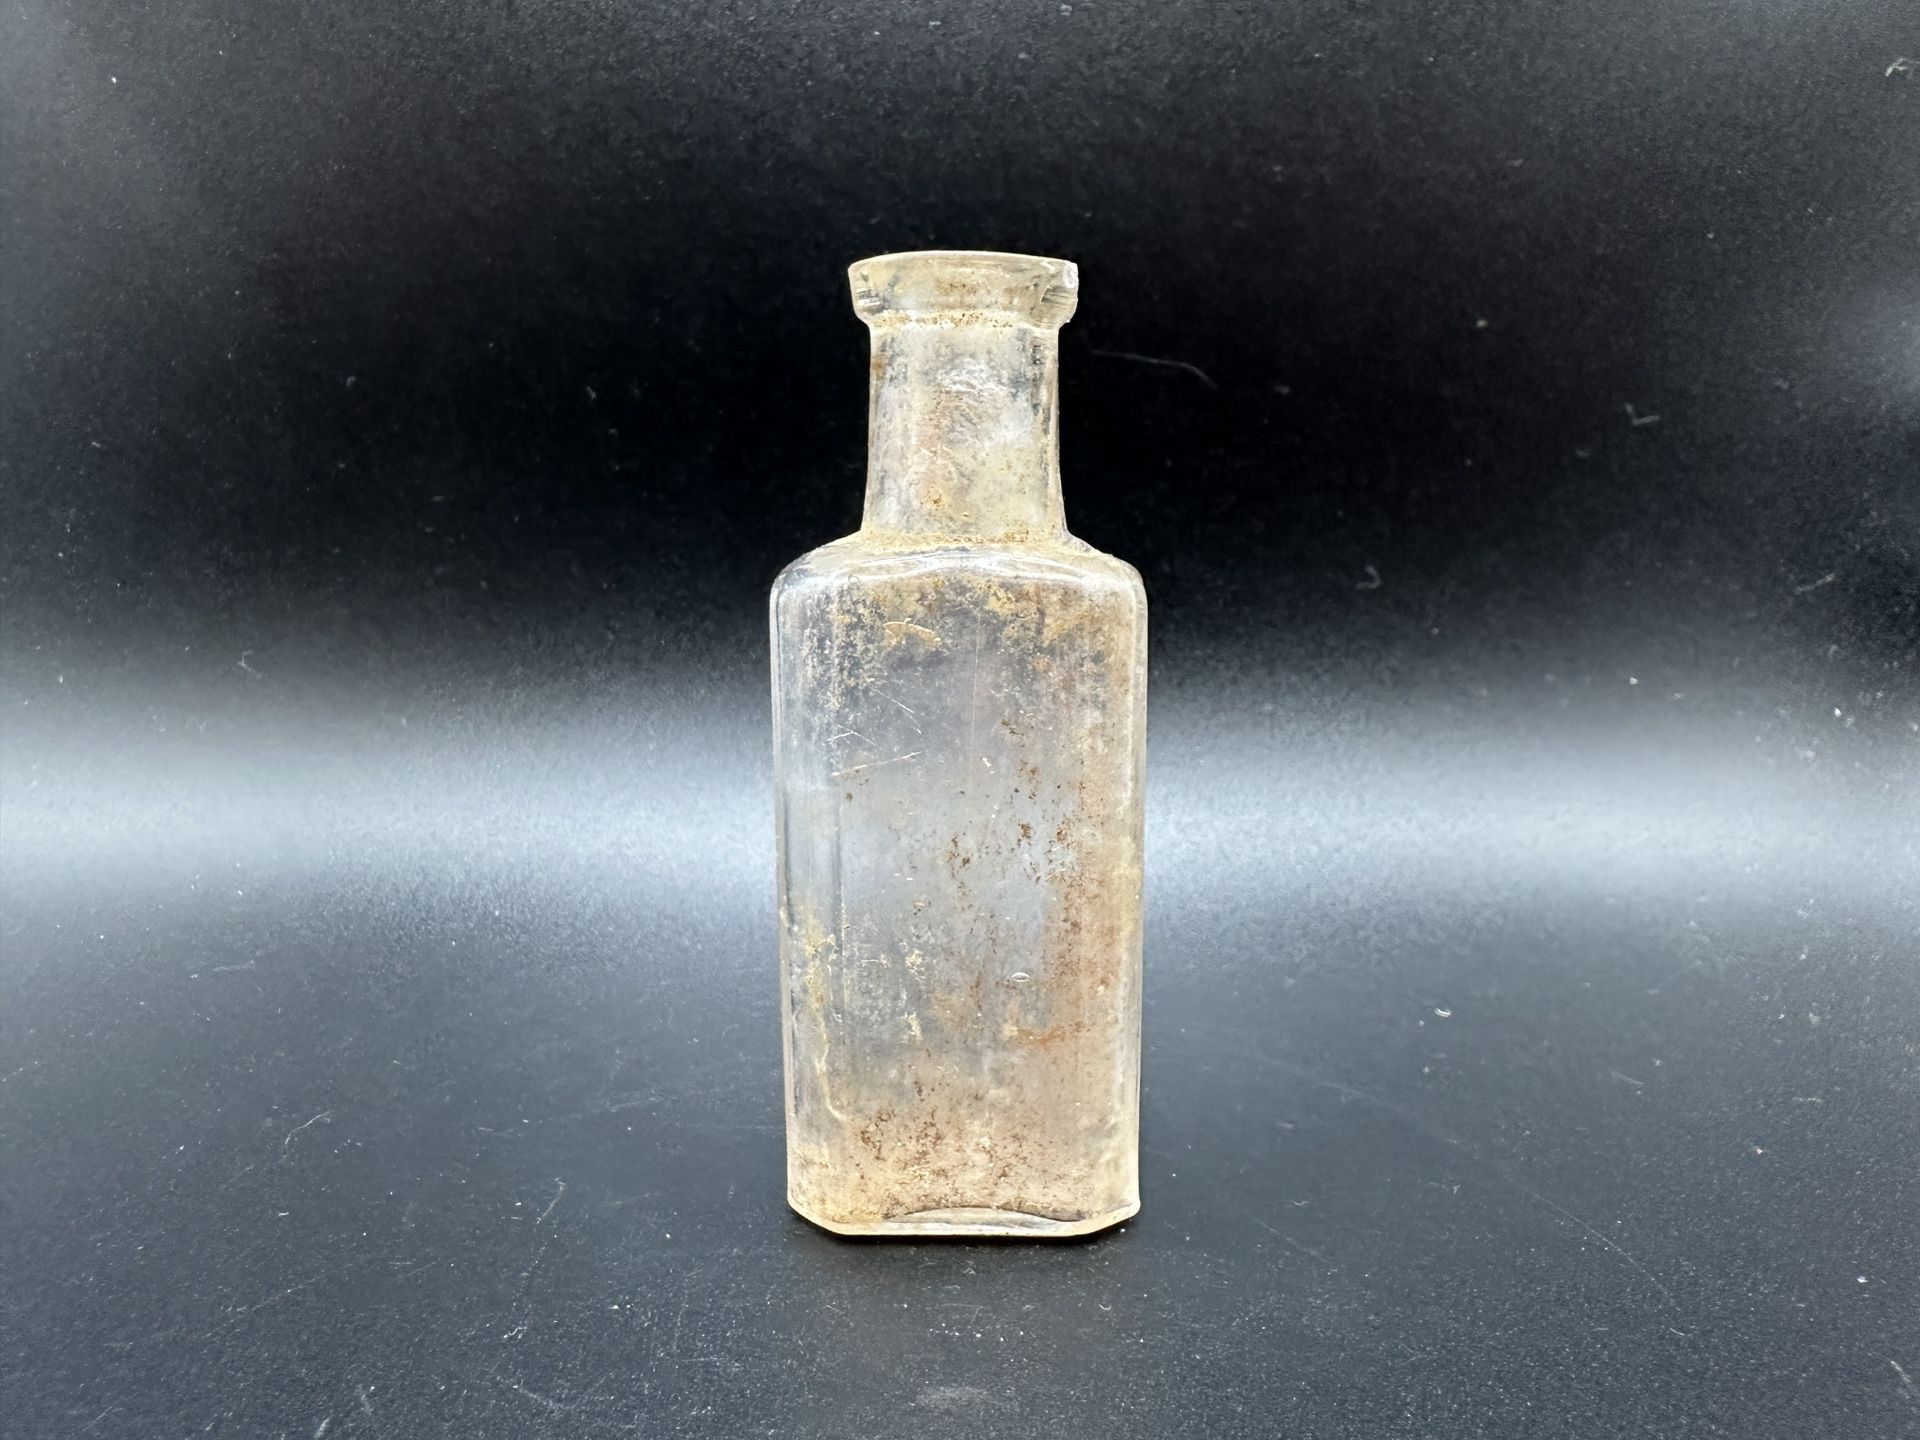 Antique Glass Medicine Bottle 